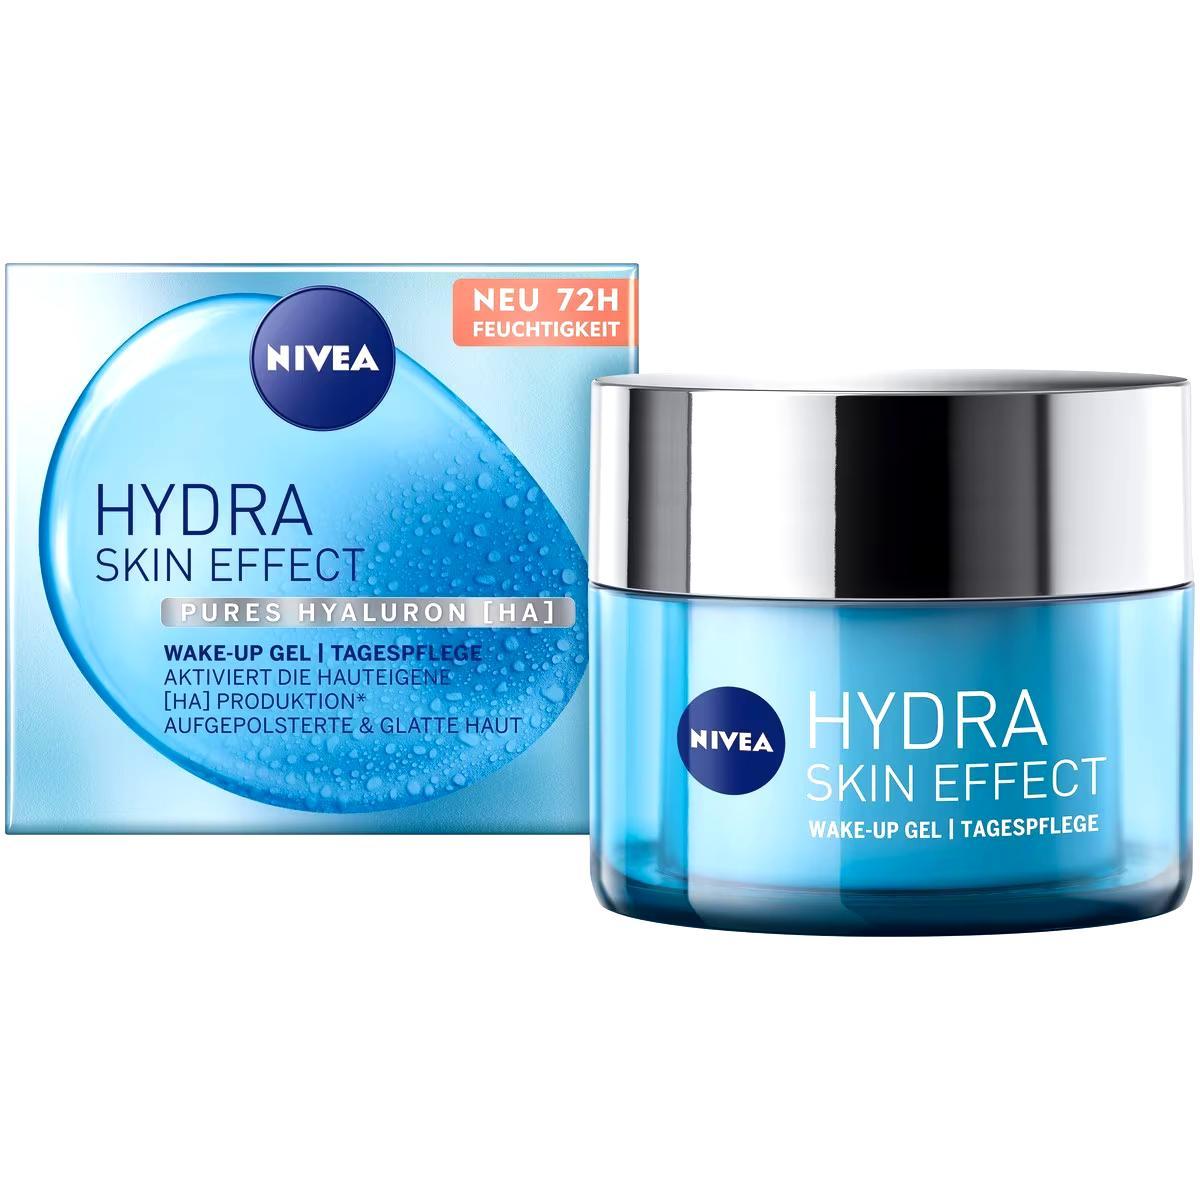 Hydra Skin Effect Wake-Up Gel Daily Care